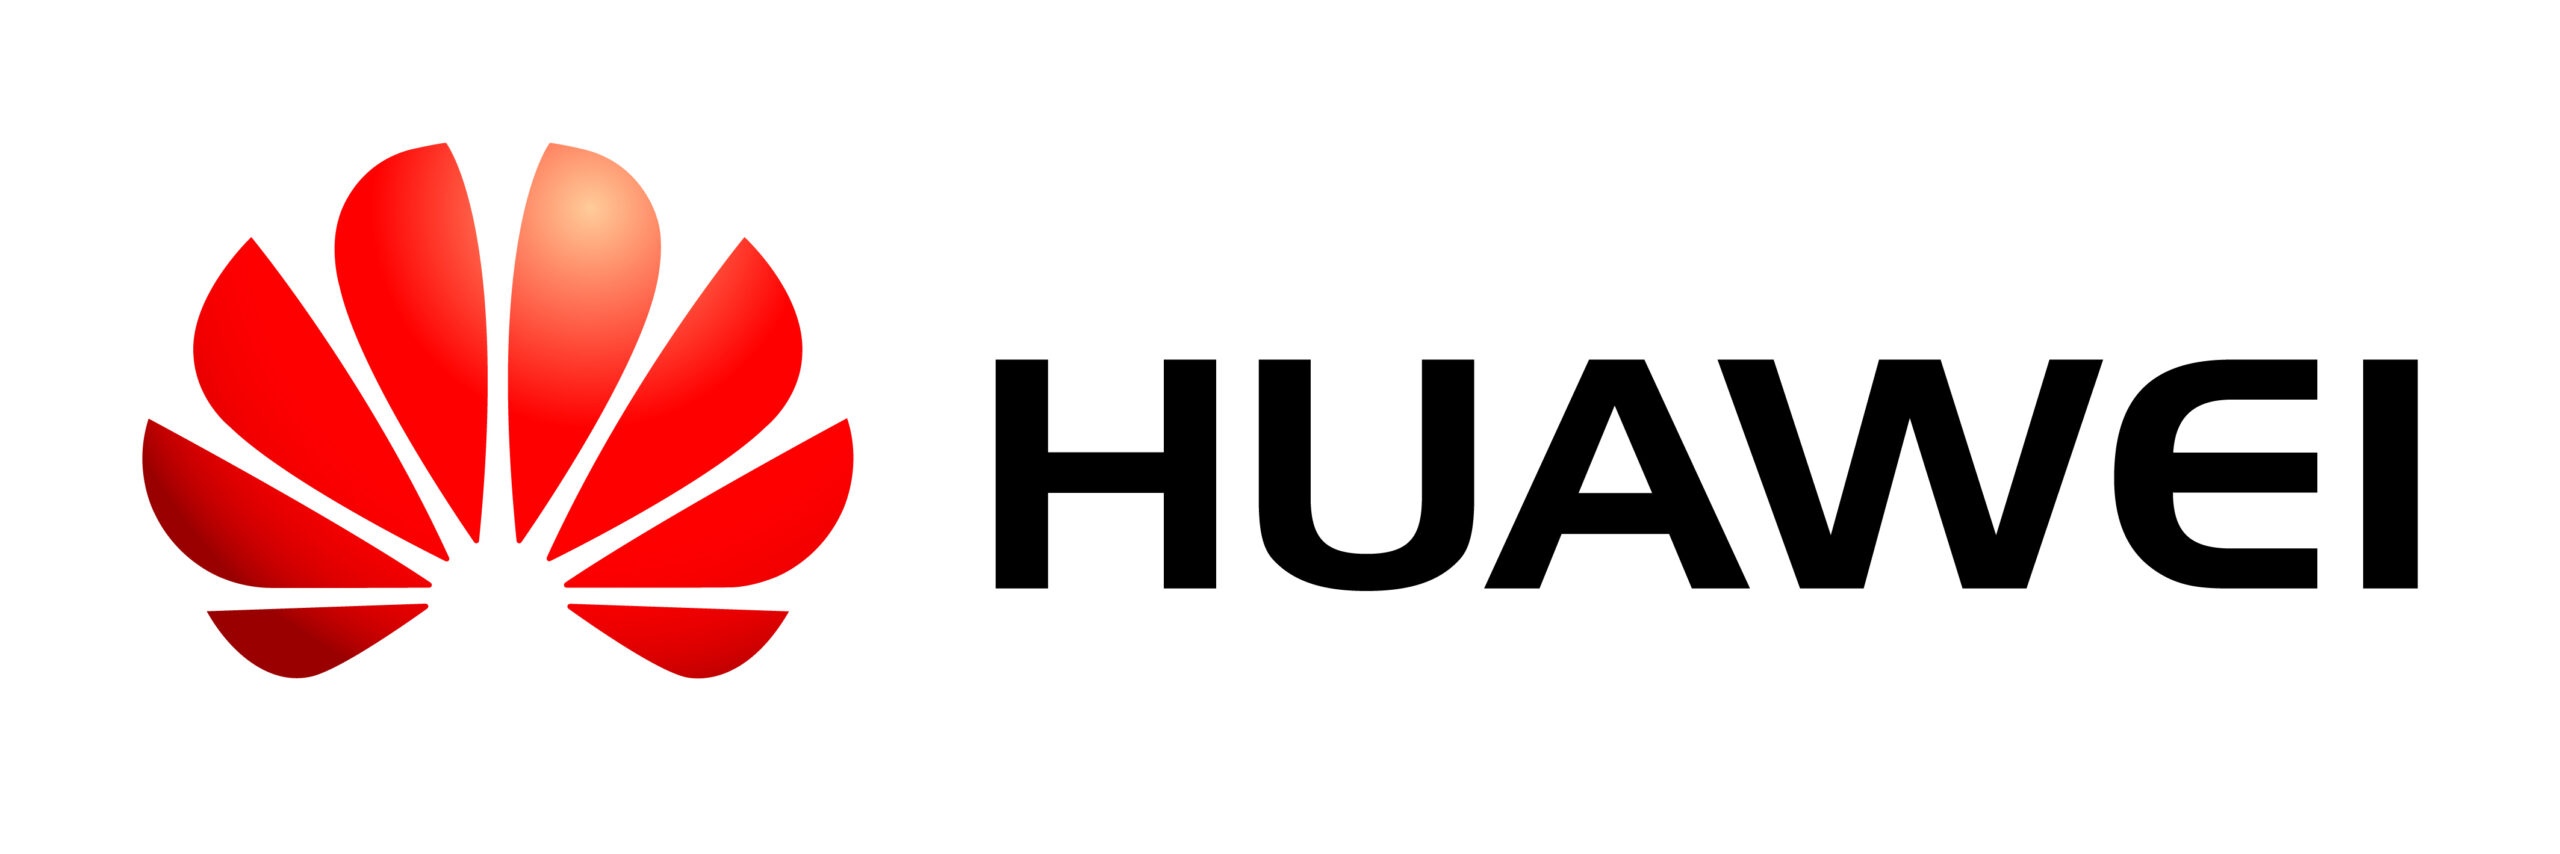 Huawei-logo-wallpaper